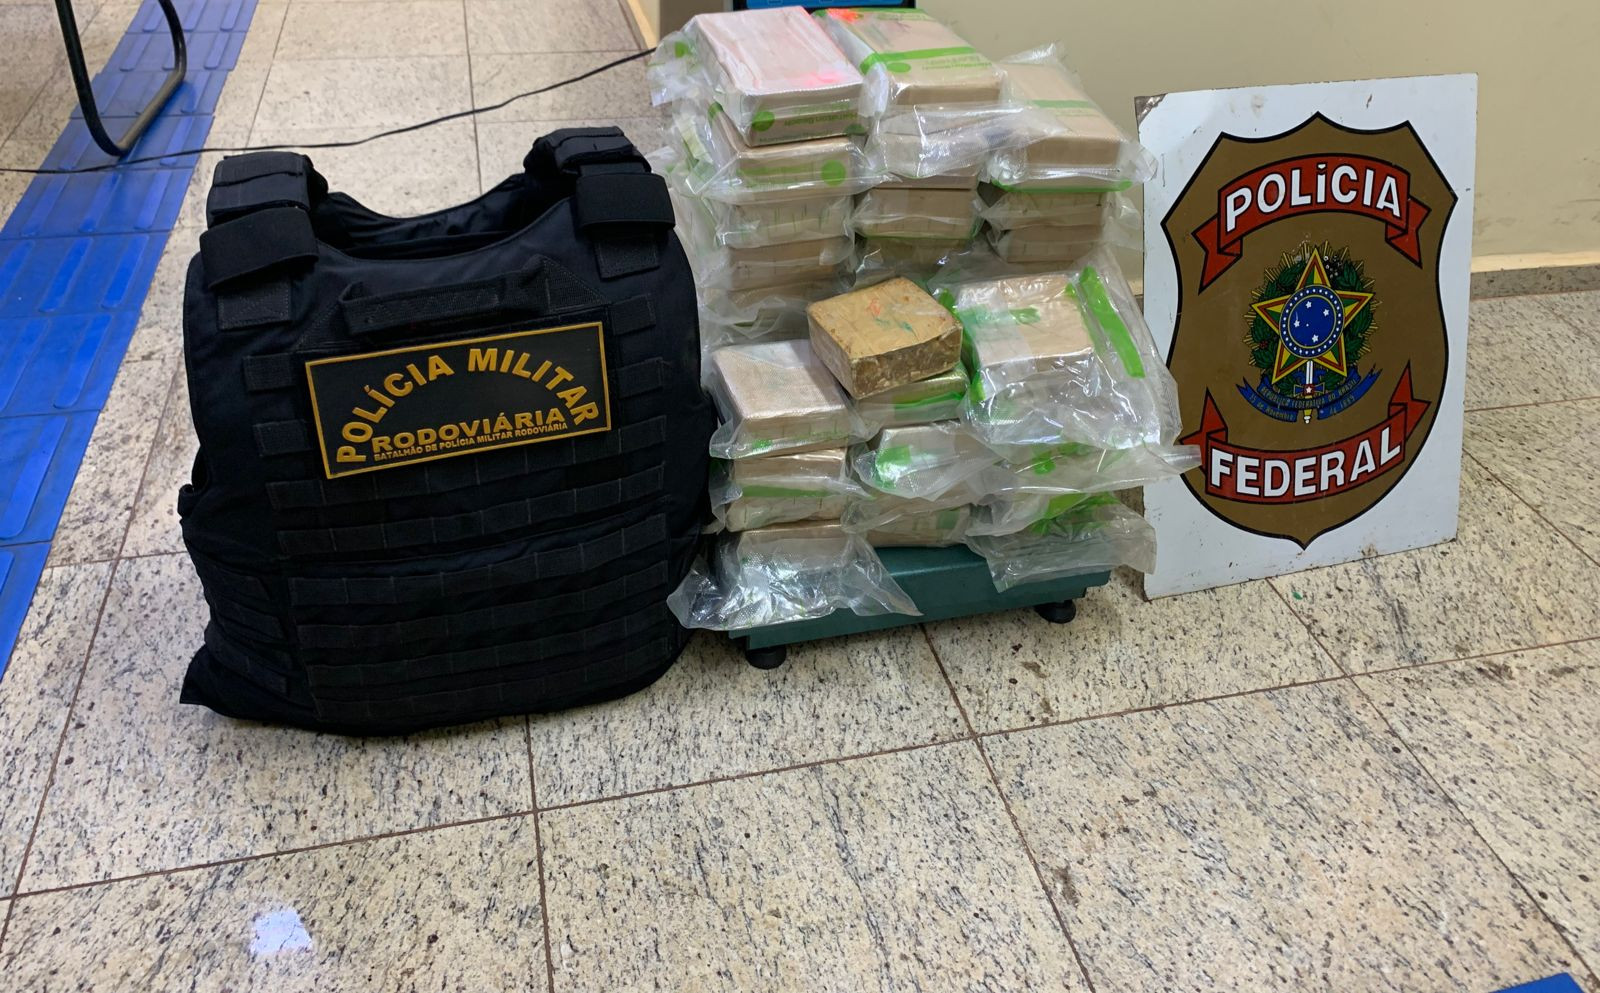 PMR de Amambai com apoio da Polícia Federal, apreende 34 kg de pasta base de cocaína, na MS 180